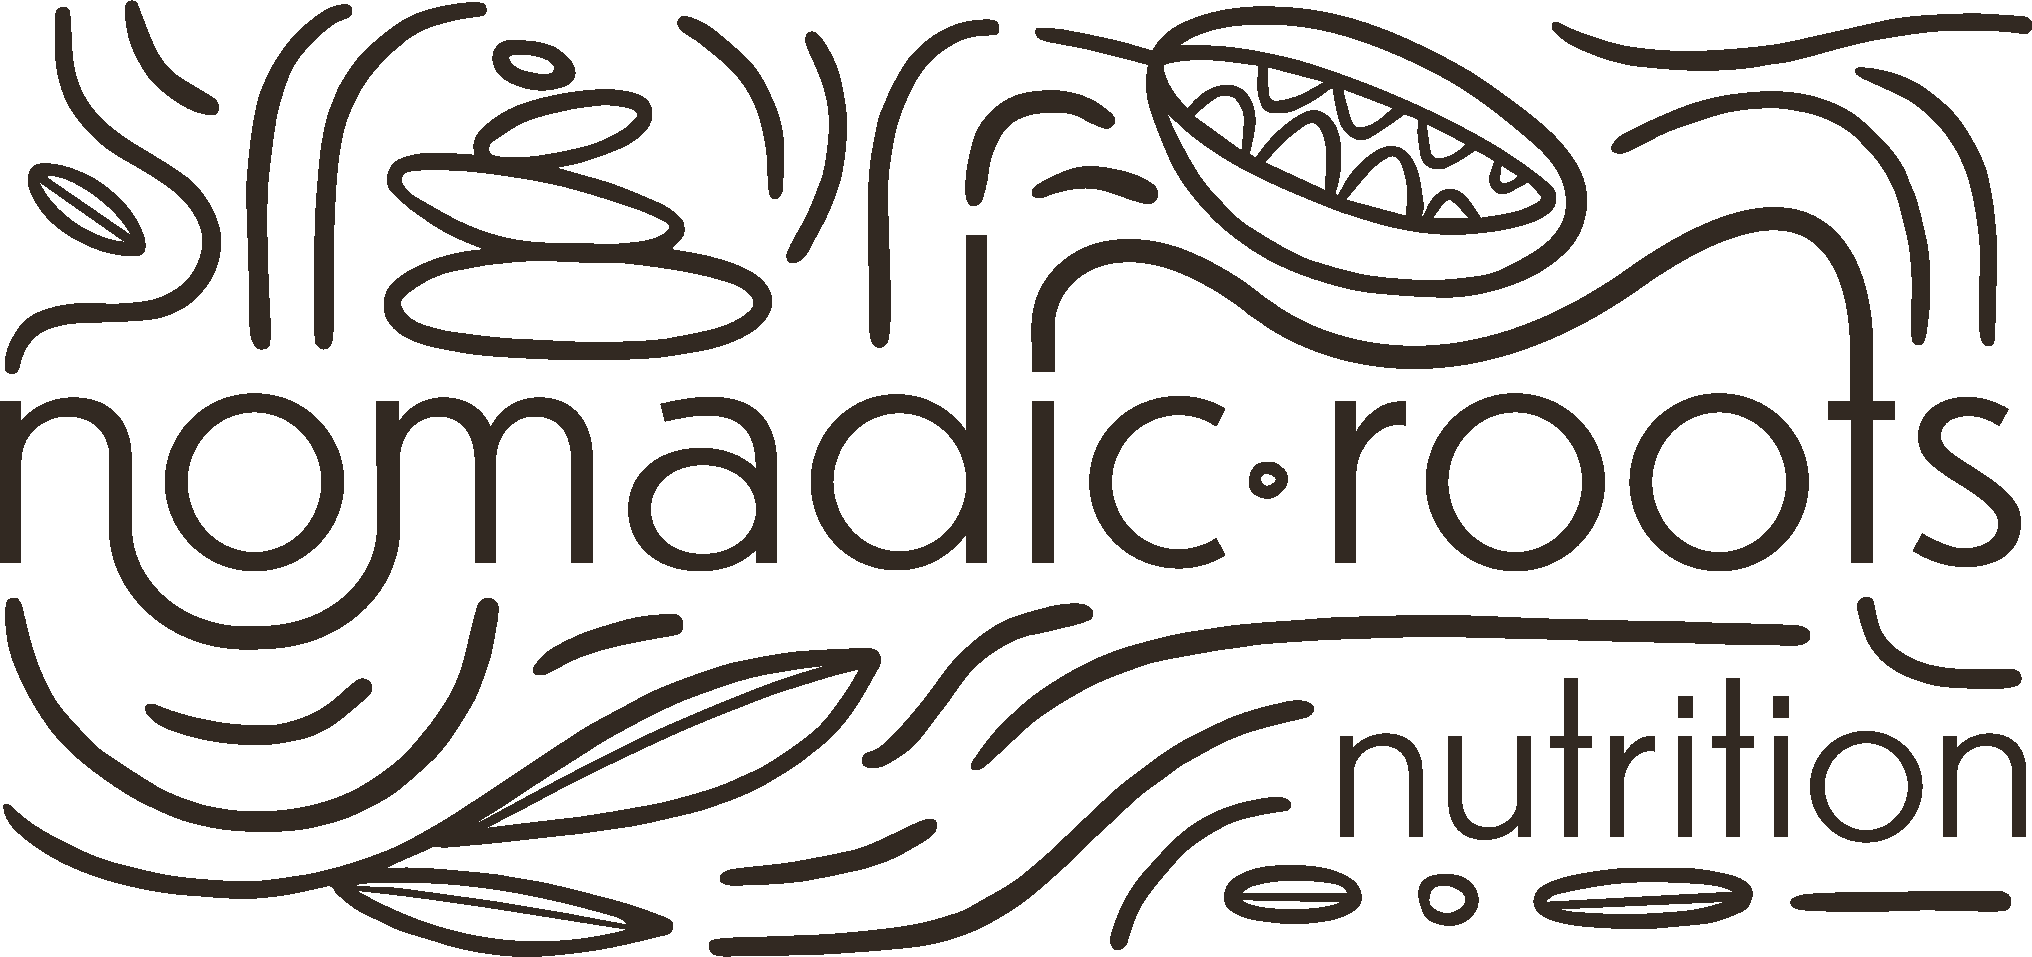 Nomadic Roots Nutrition logo